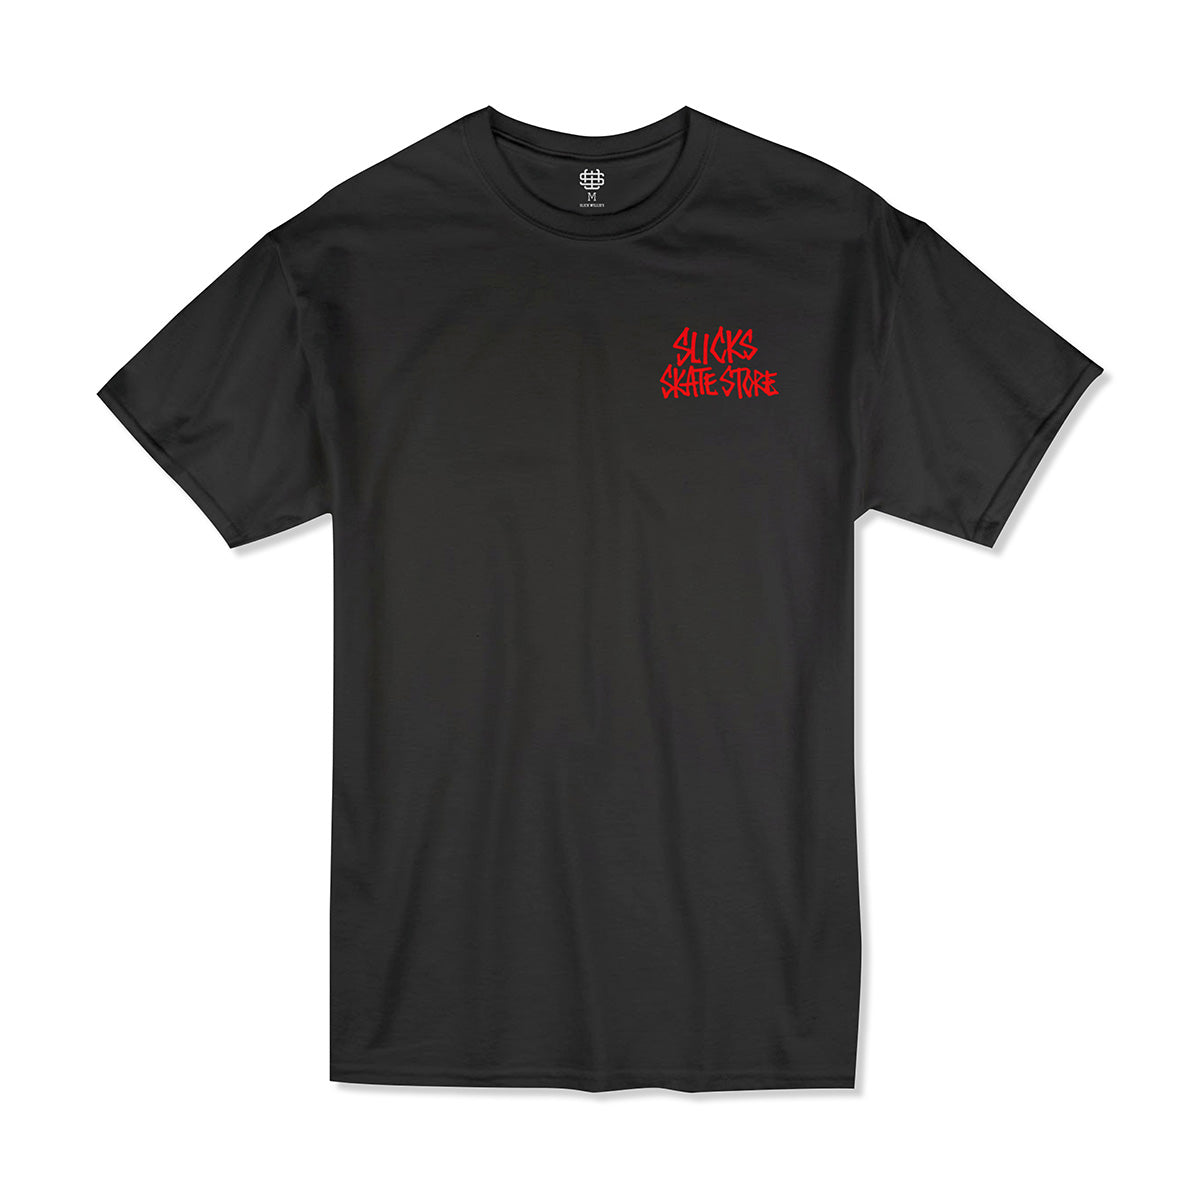 Slick's Skate Store Fos Crossbones T-Shirt - Black